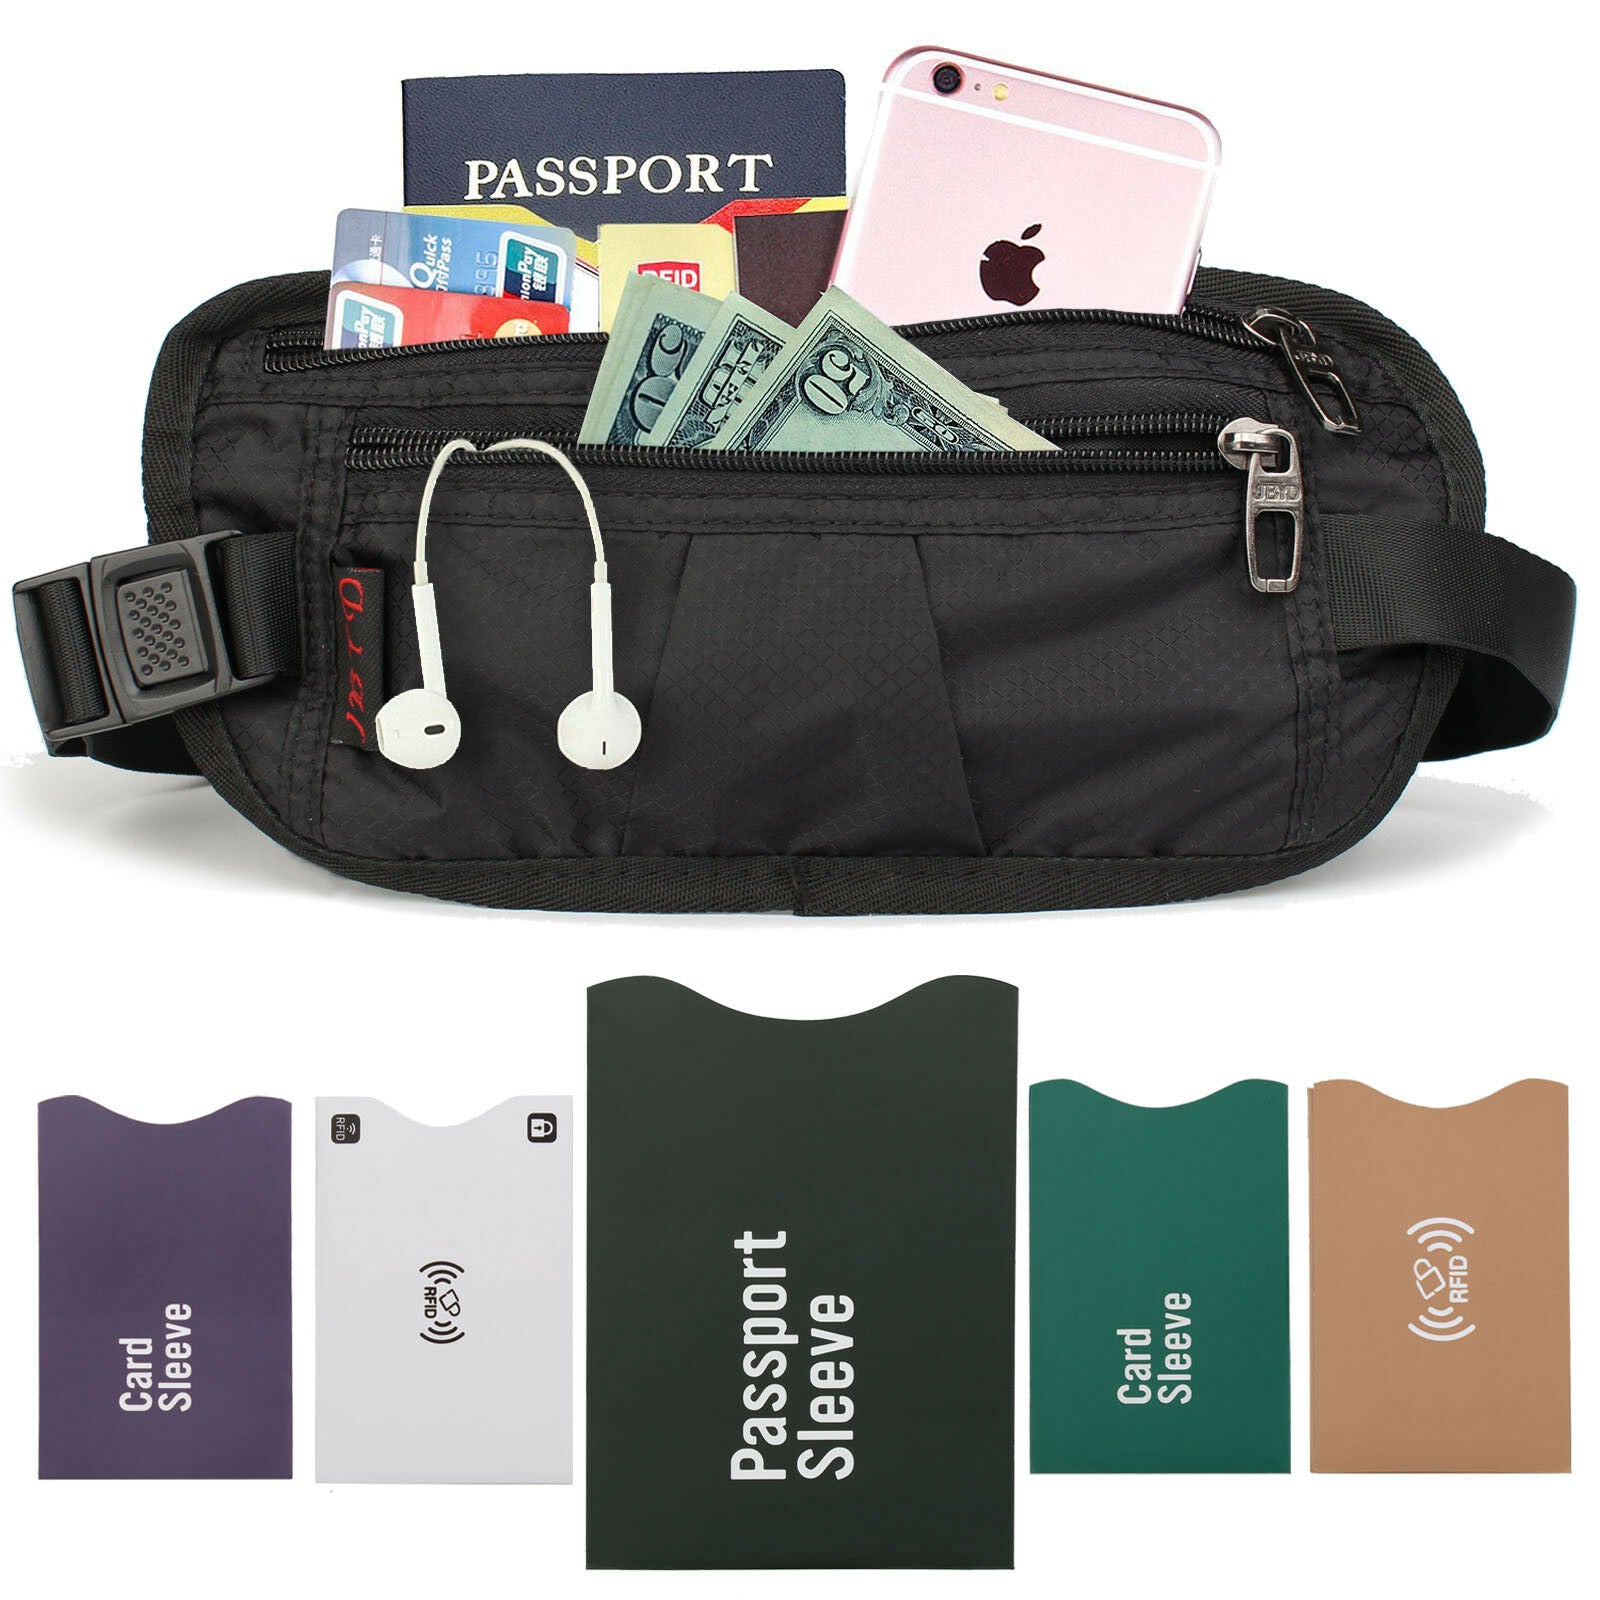 AllTopBargains 1pc Money Belt Pouch Hidden Travel Wallet Passport ID Holder Secure Khaki Unisex